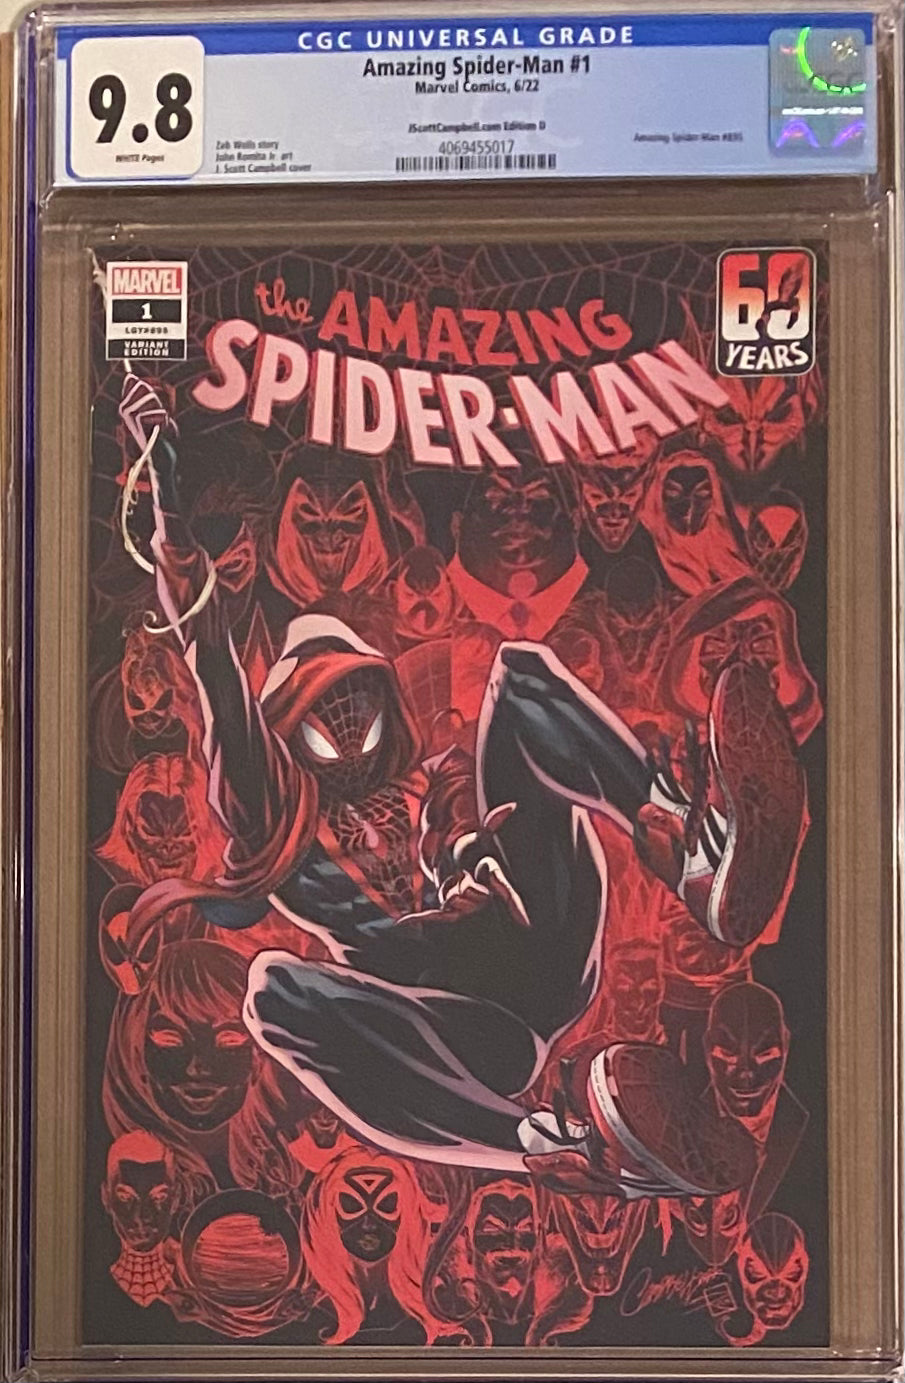 Amazing Spider-Man #1 J. Scott Campbell Edition D "Miles Morales" CGC 9.8